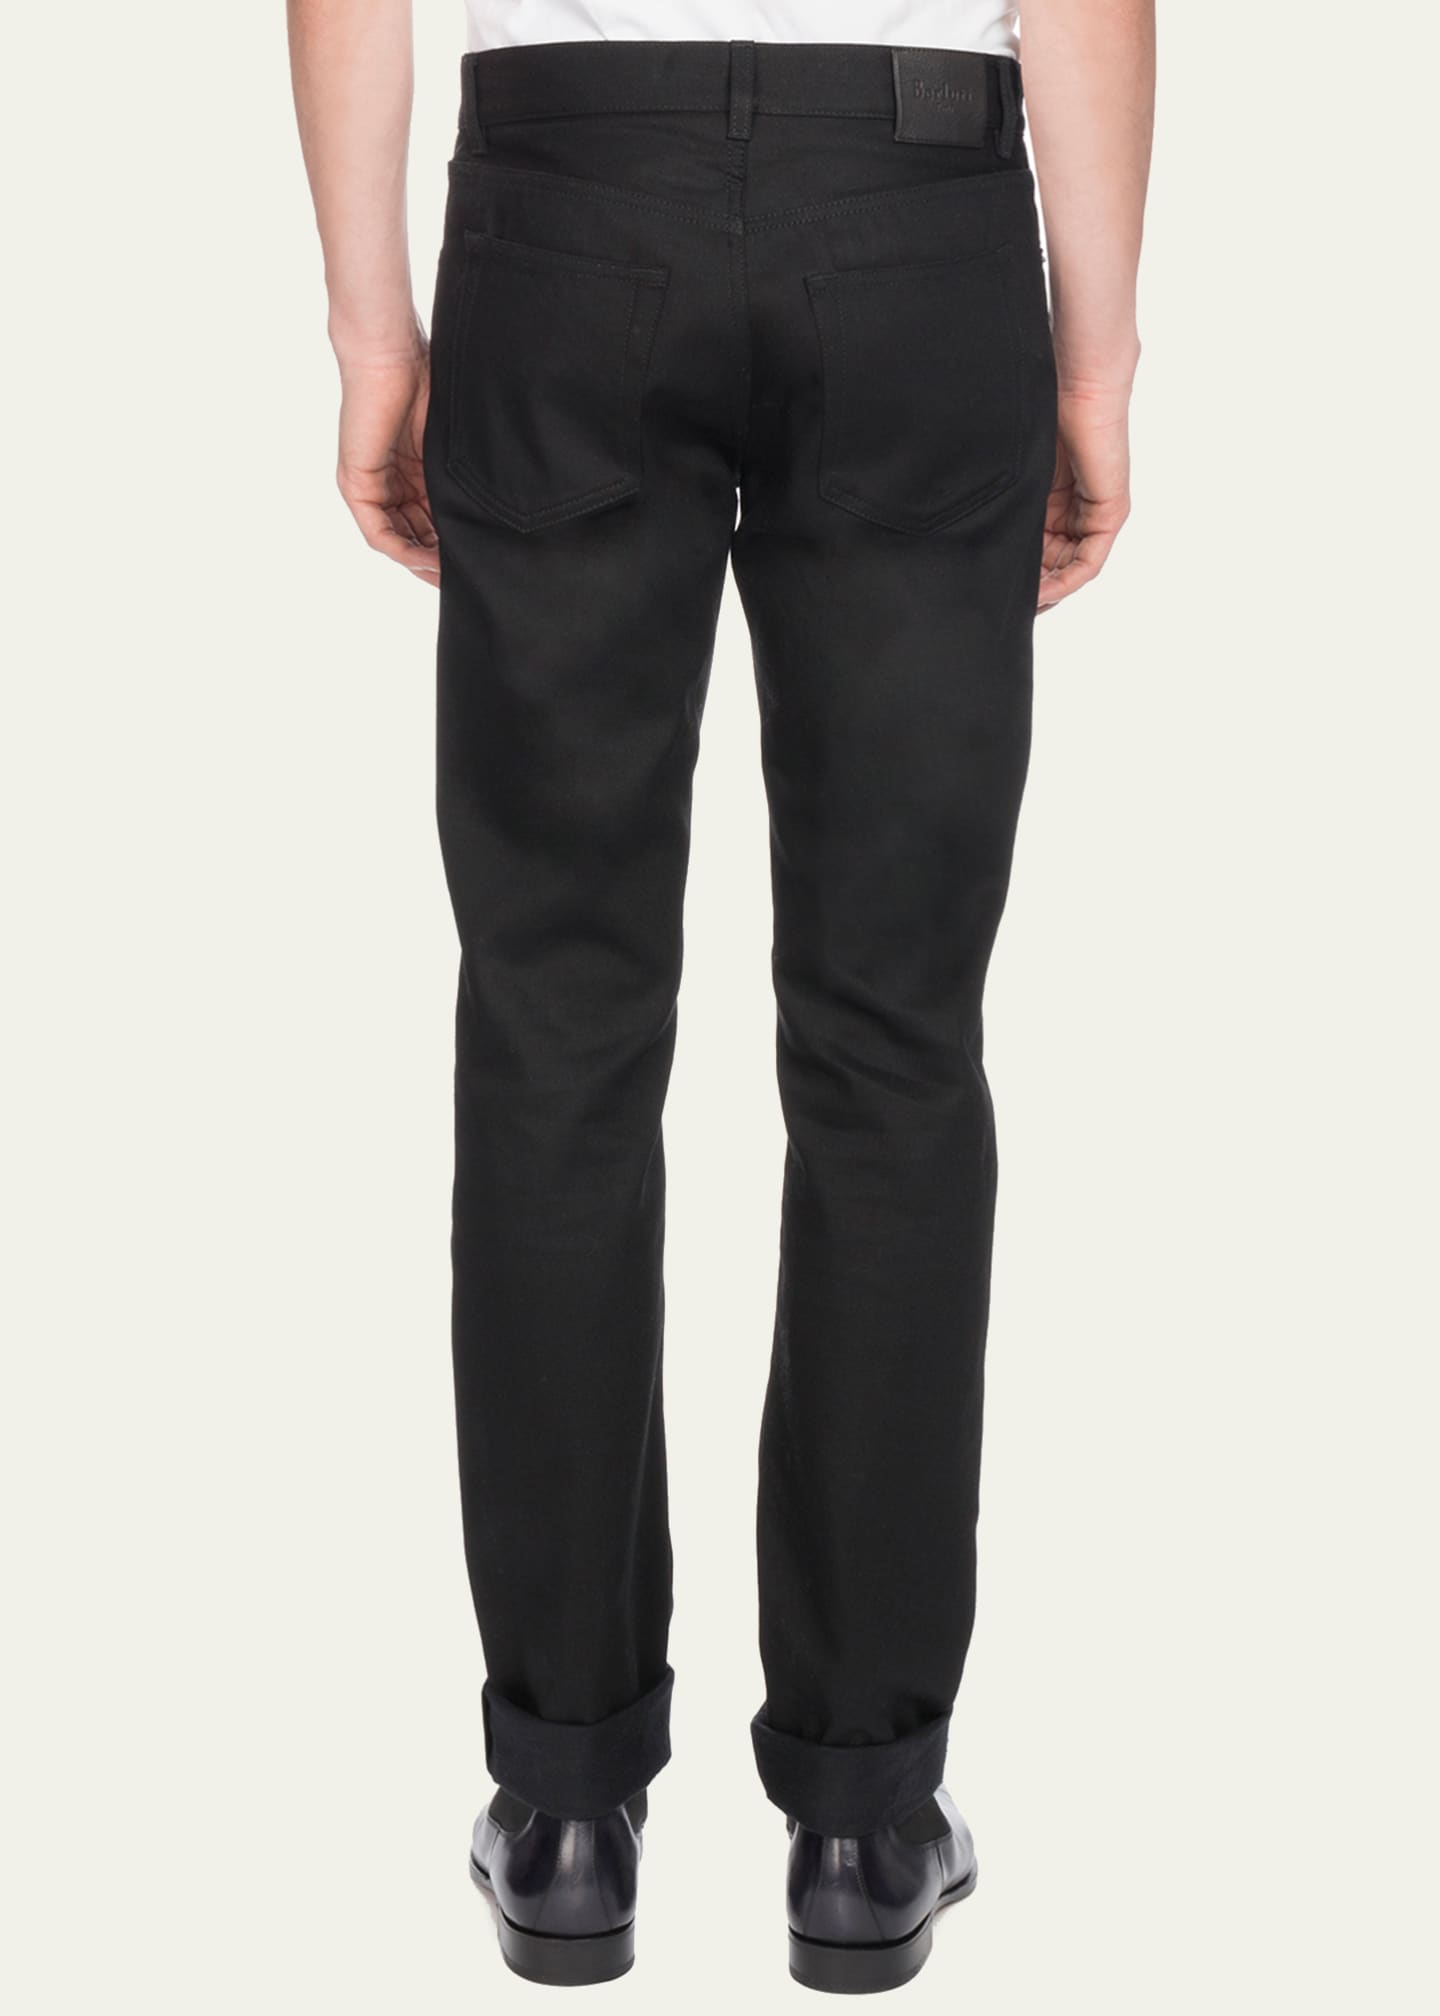 Berluti Men's Straight-Leg Cotton Jeans, Black - Bergdorf Goodman